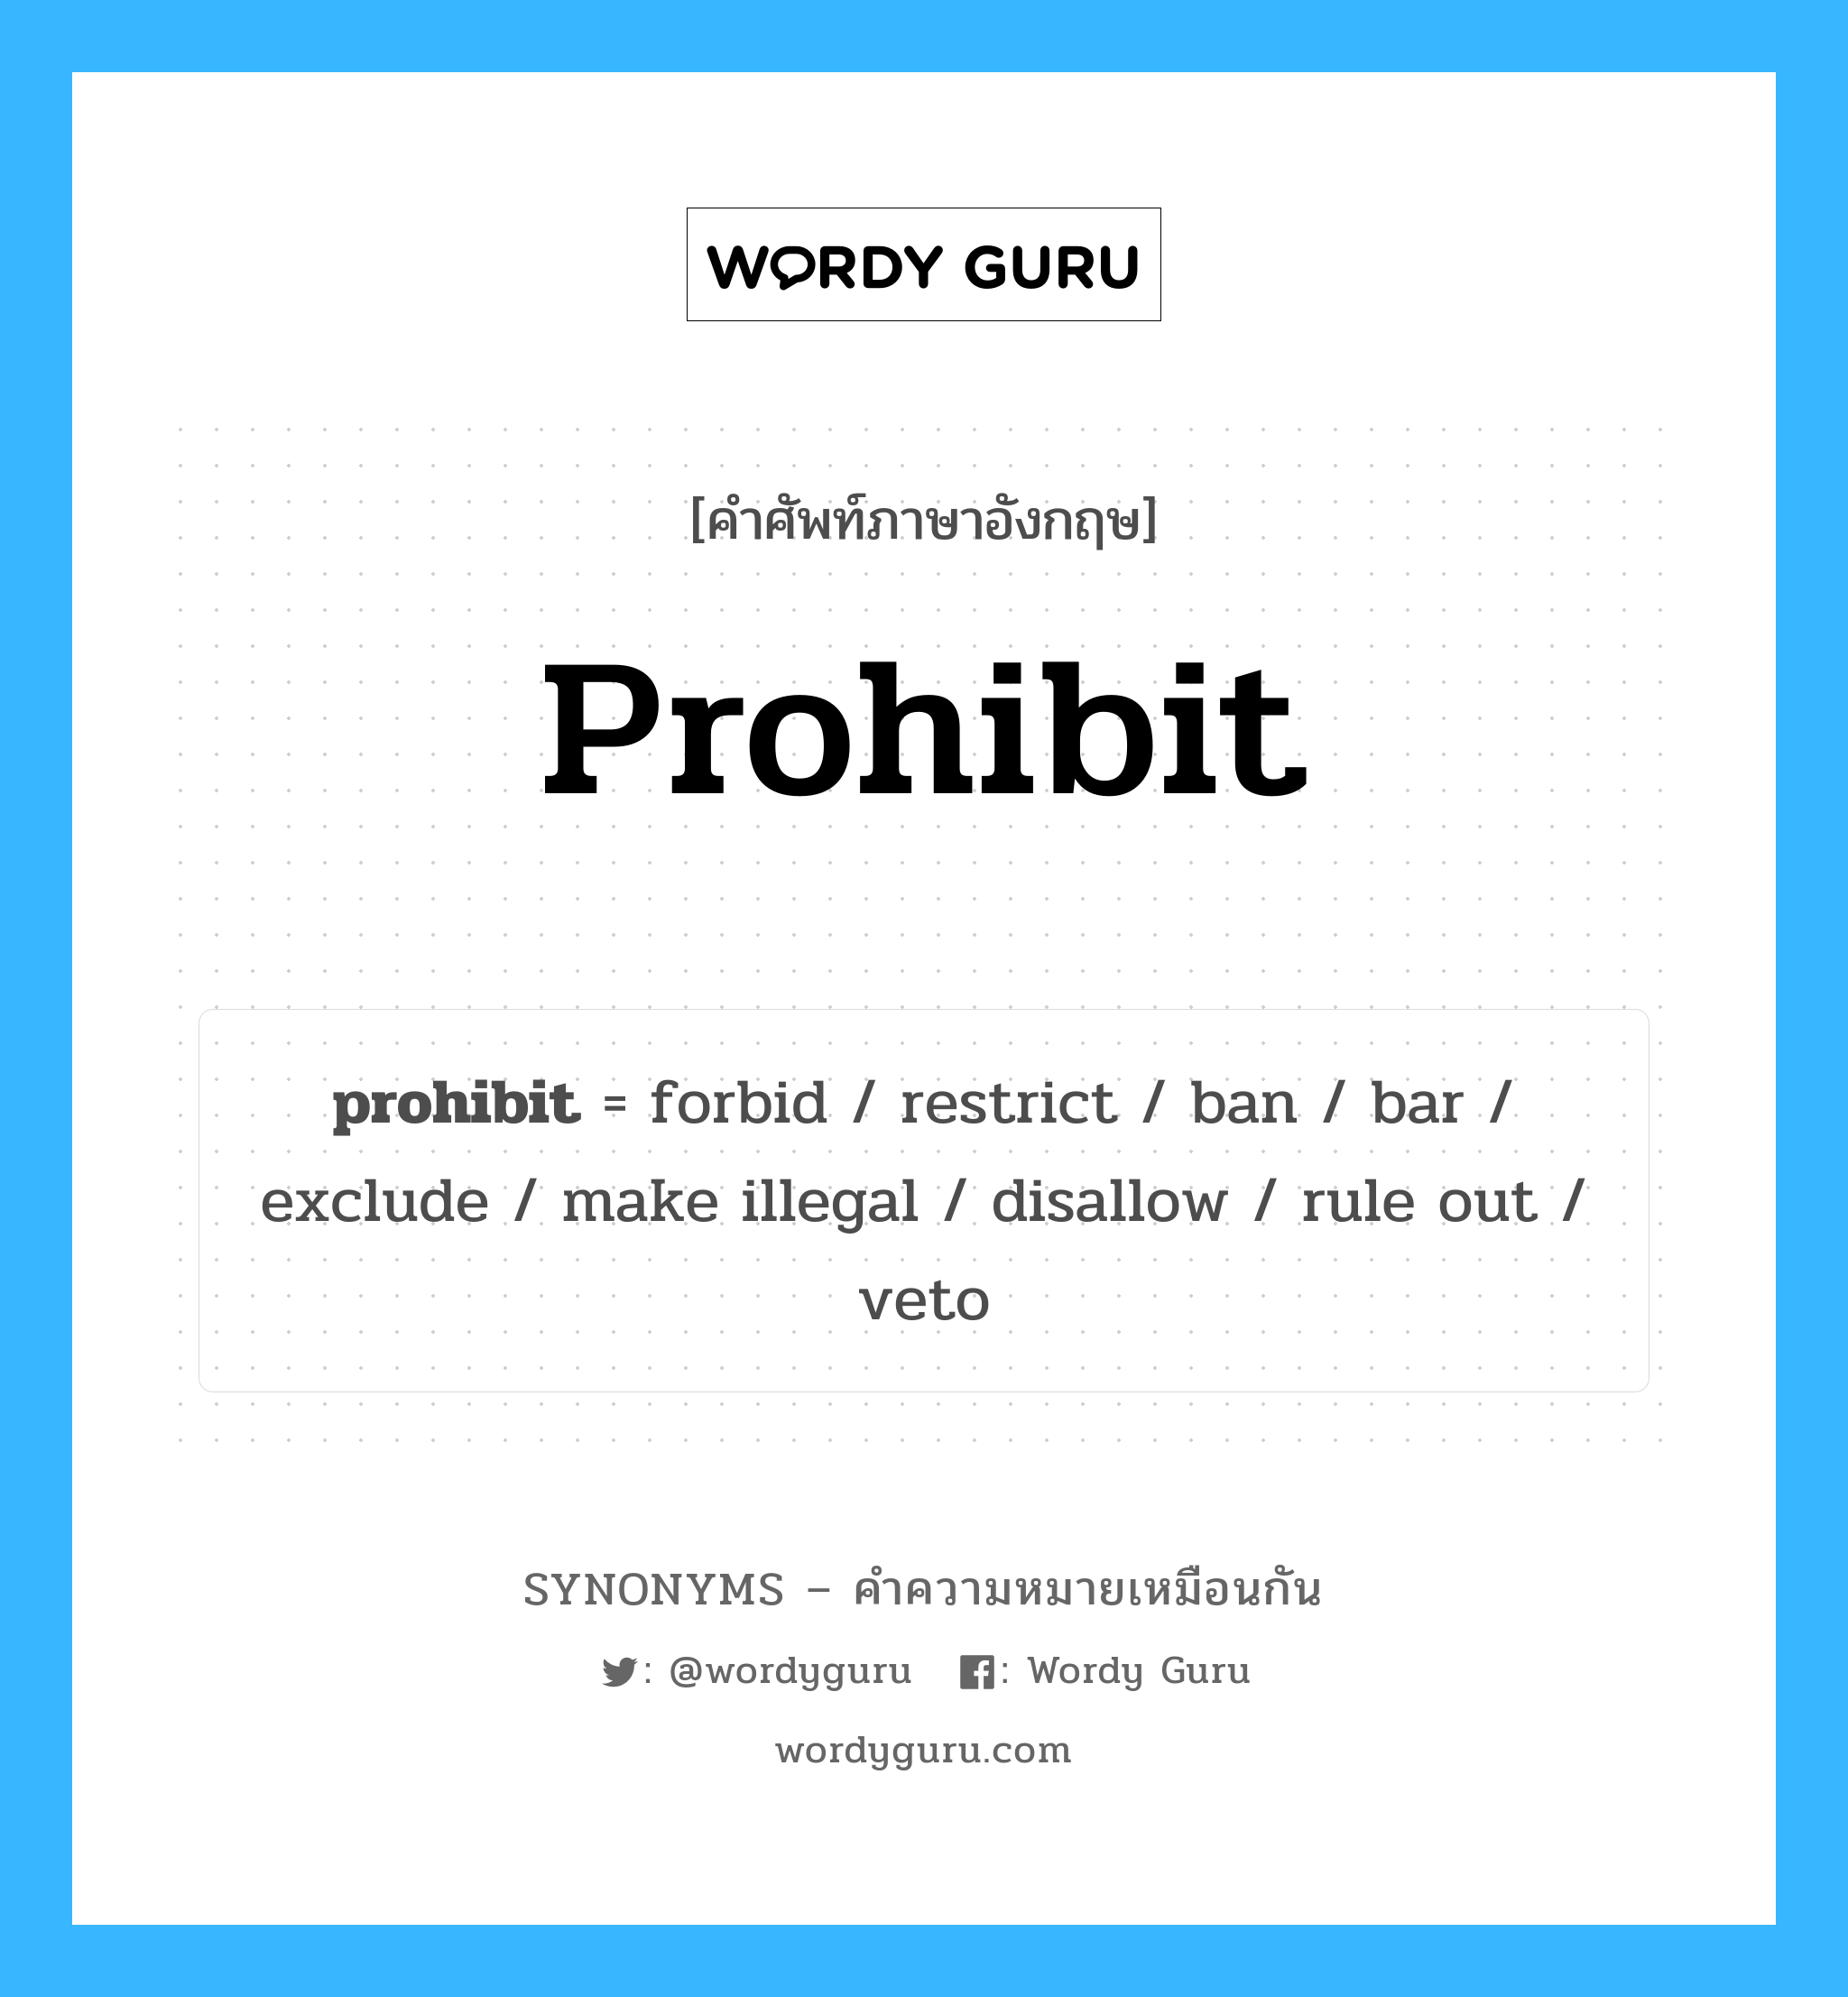 prohibit เป็นหนึ่งใน forbid และมีคำอื่น ๆ อีกดังนี้, คำศัพท์ภาษาอังกฤษ prohibit ความหมายคล้ายกันกับ forbid แปลว่า ห้าม หมวด forbid